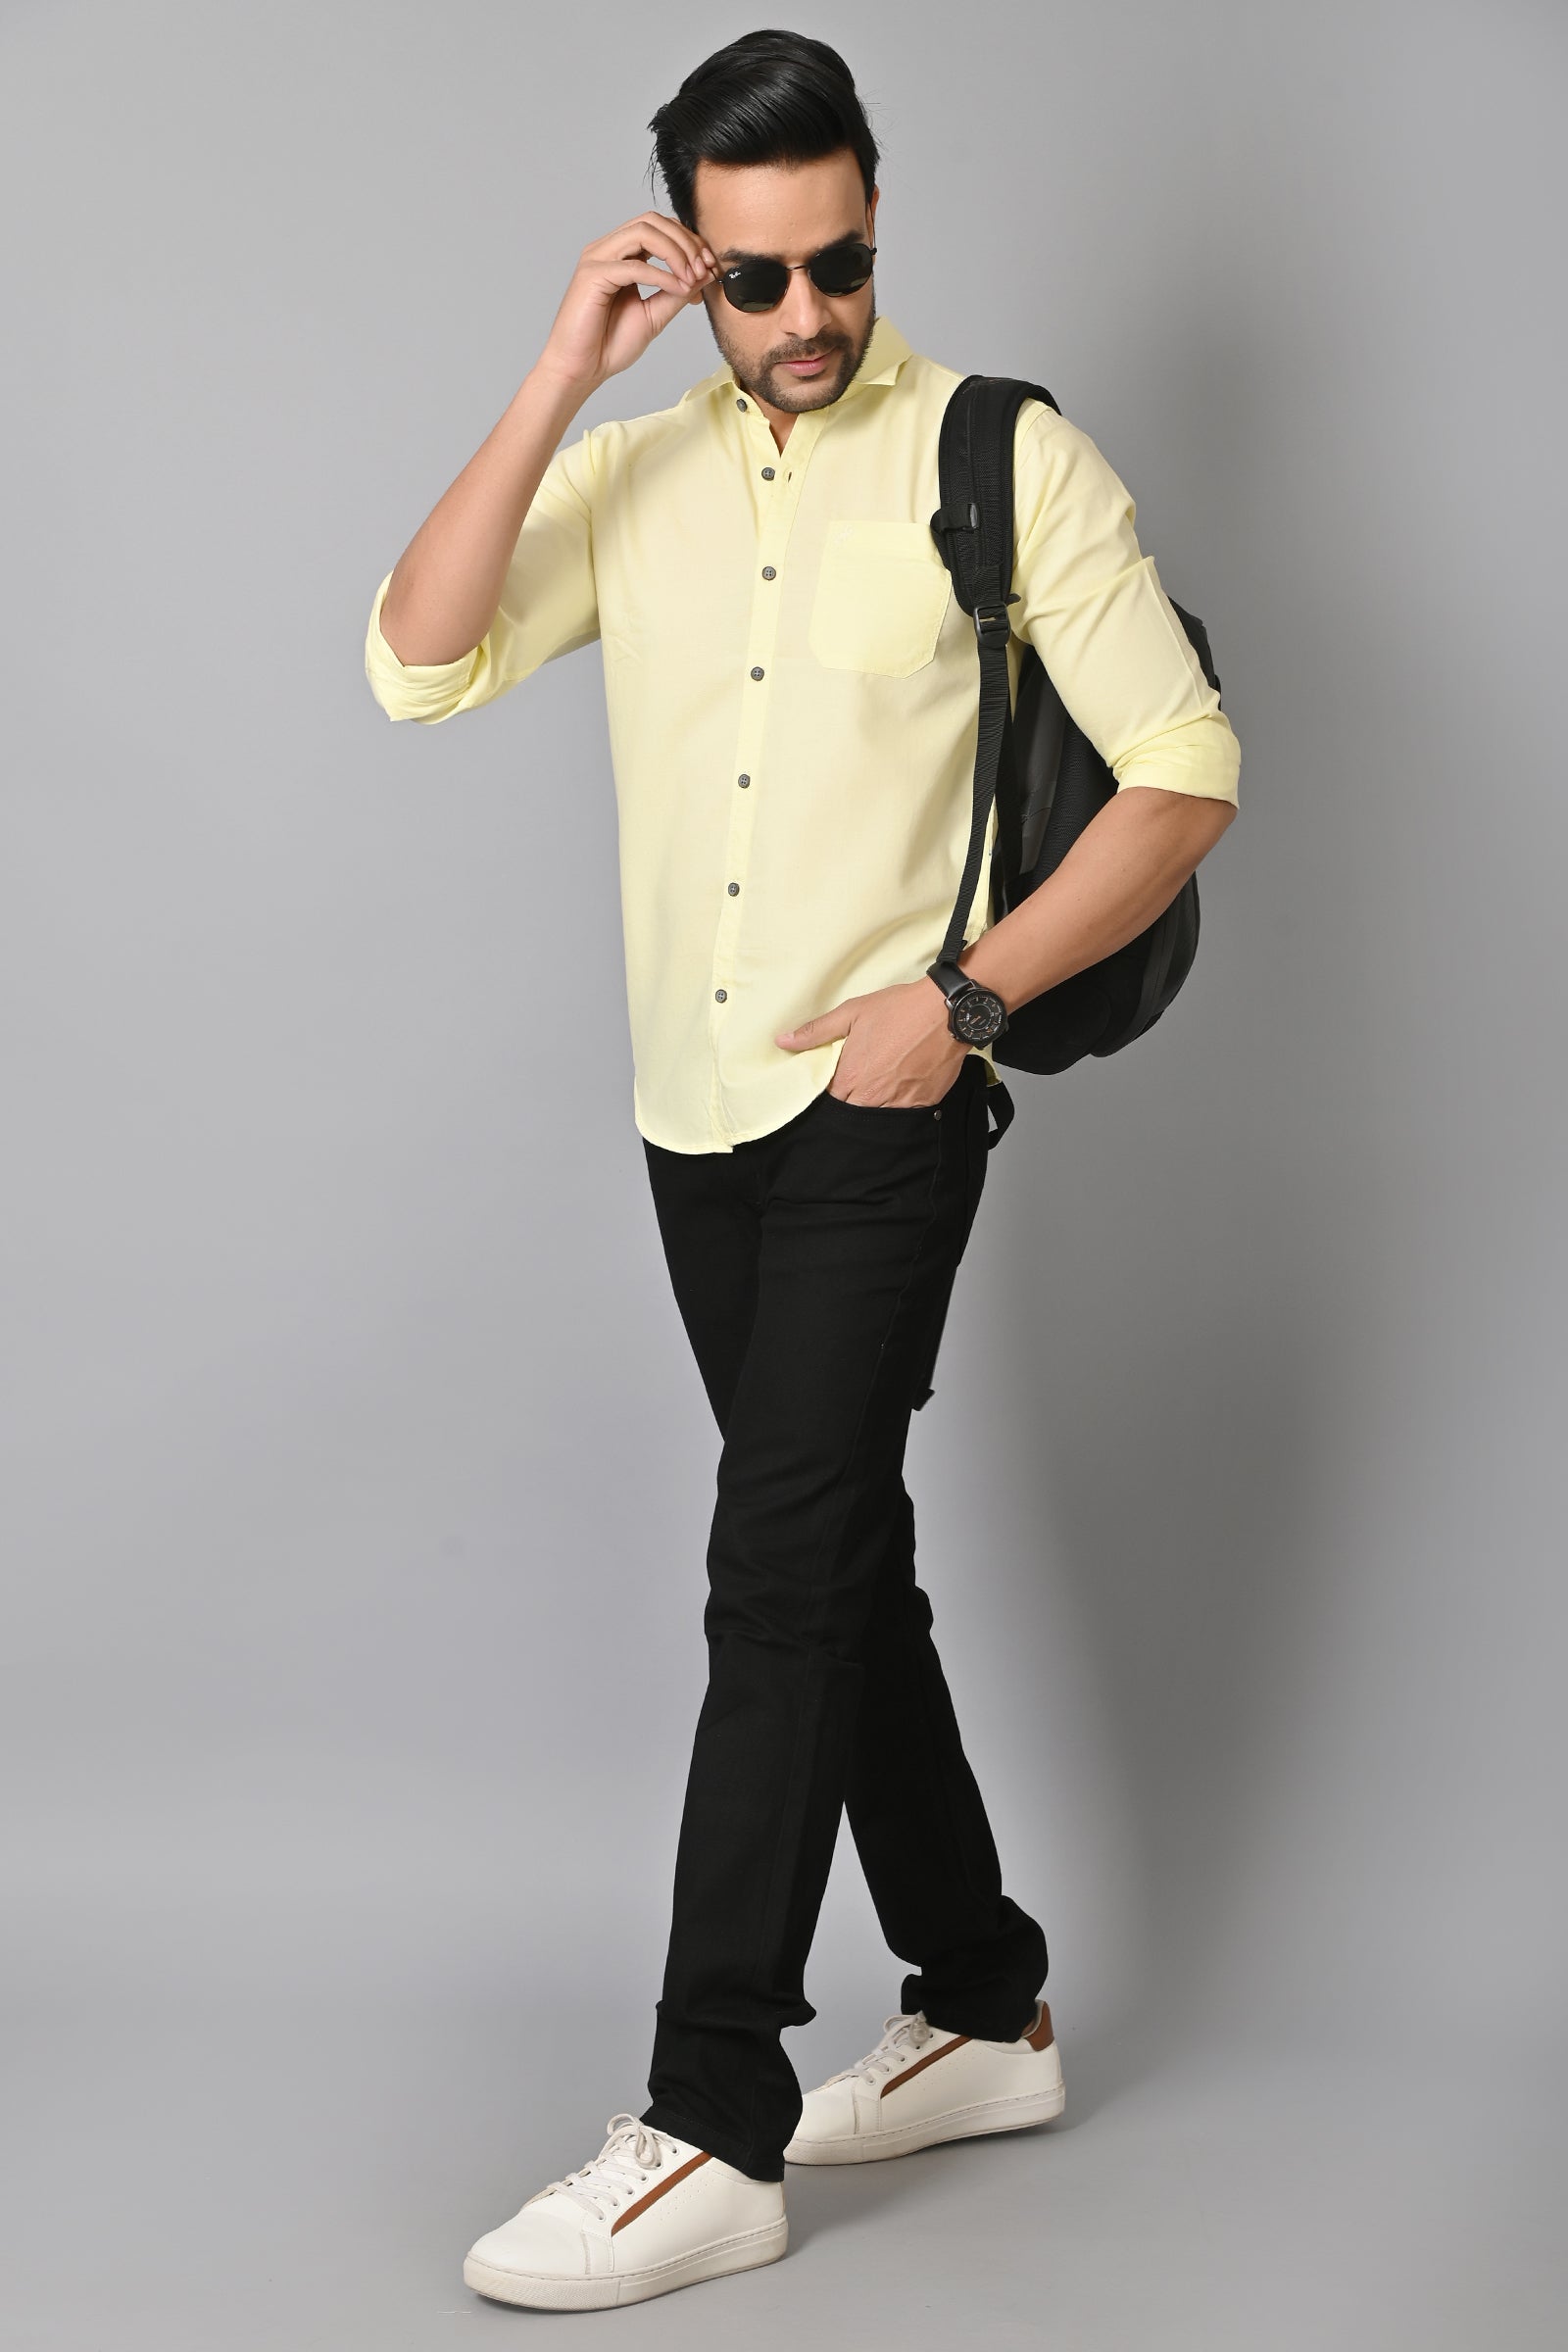 Jaguro Men's Formal shirt Cotton Lemon Yellow